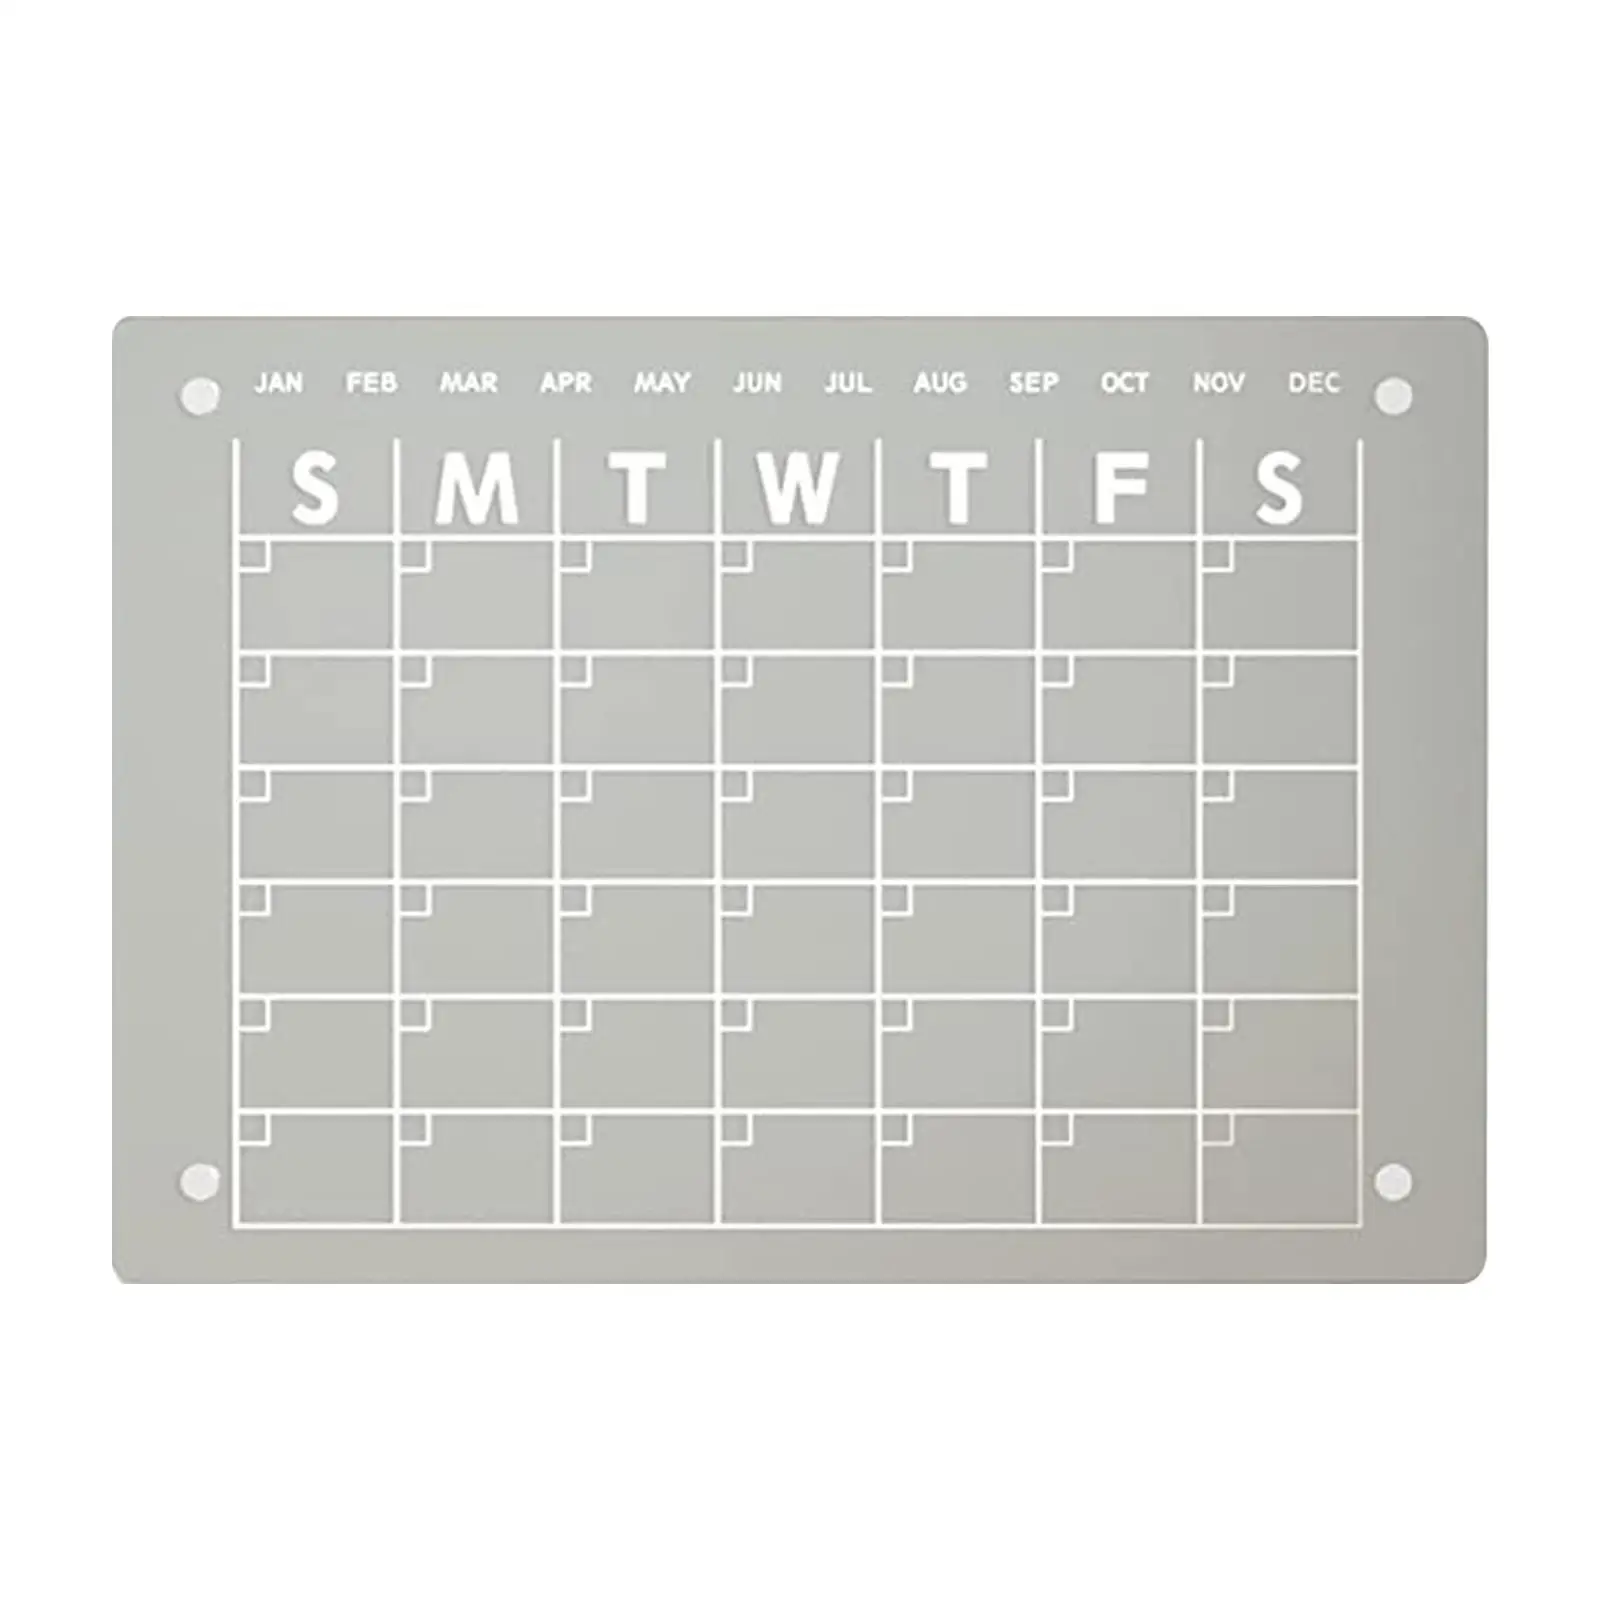 Fridge Calendar Fridge Magnets Multicolour Reusable Clear Daily Schedule Planner Sheet for Office Planning Activities Chores